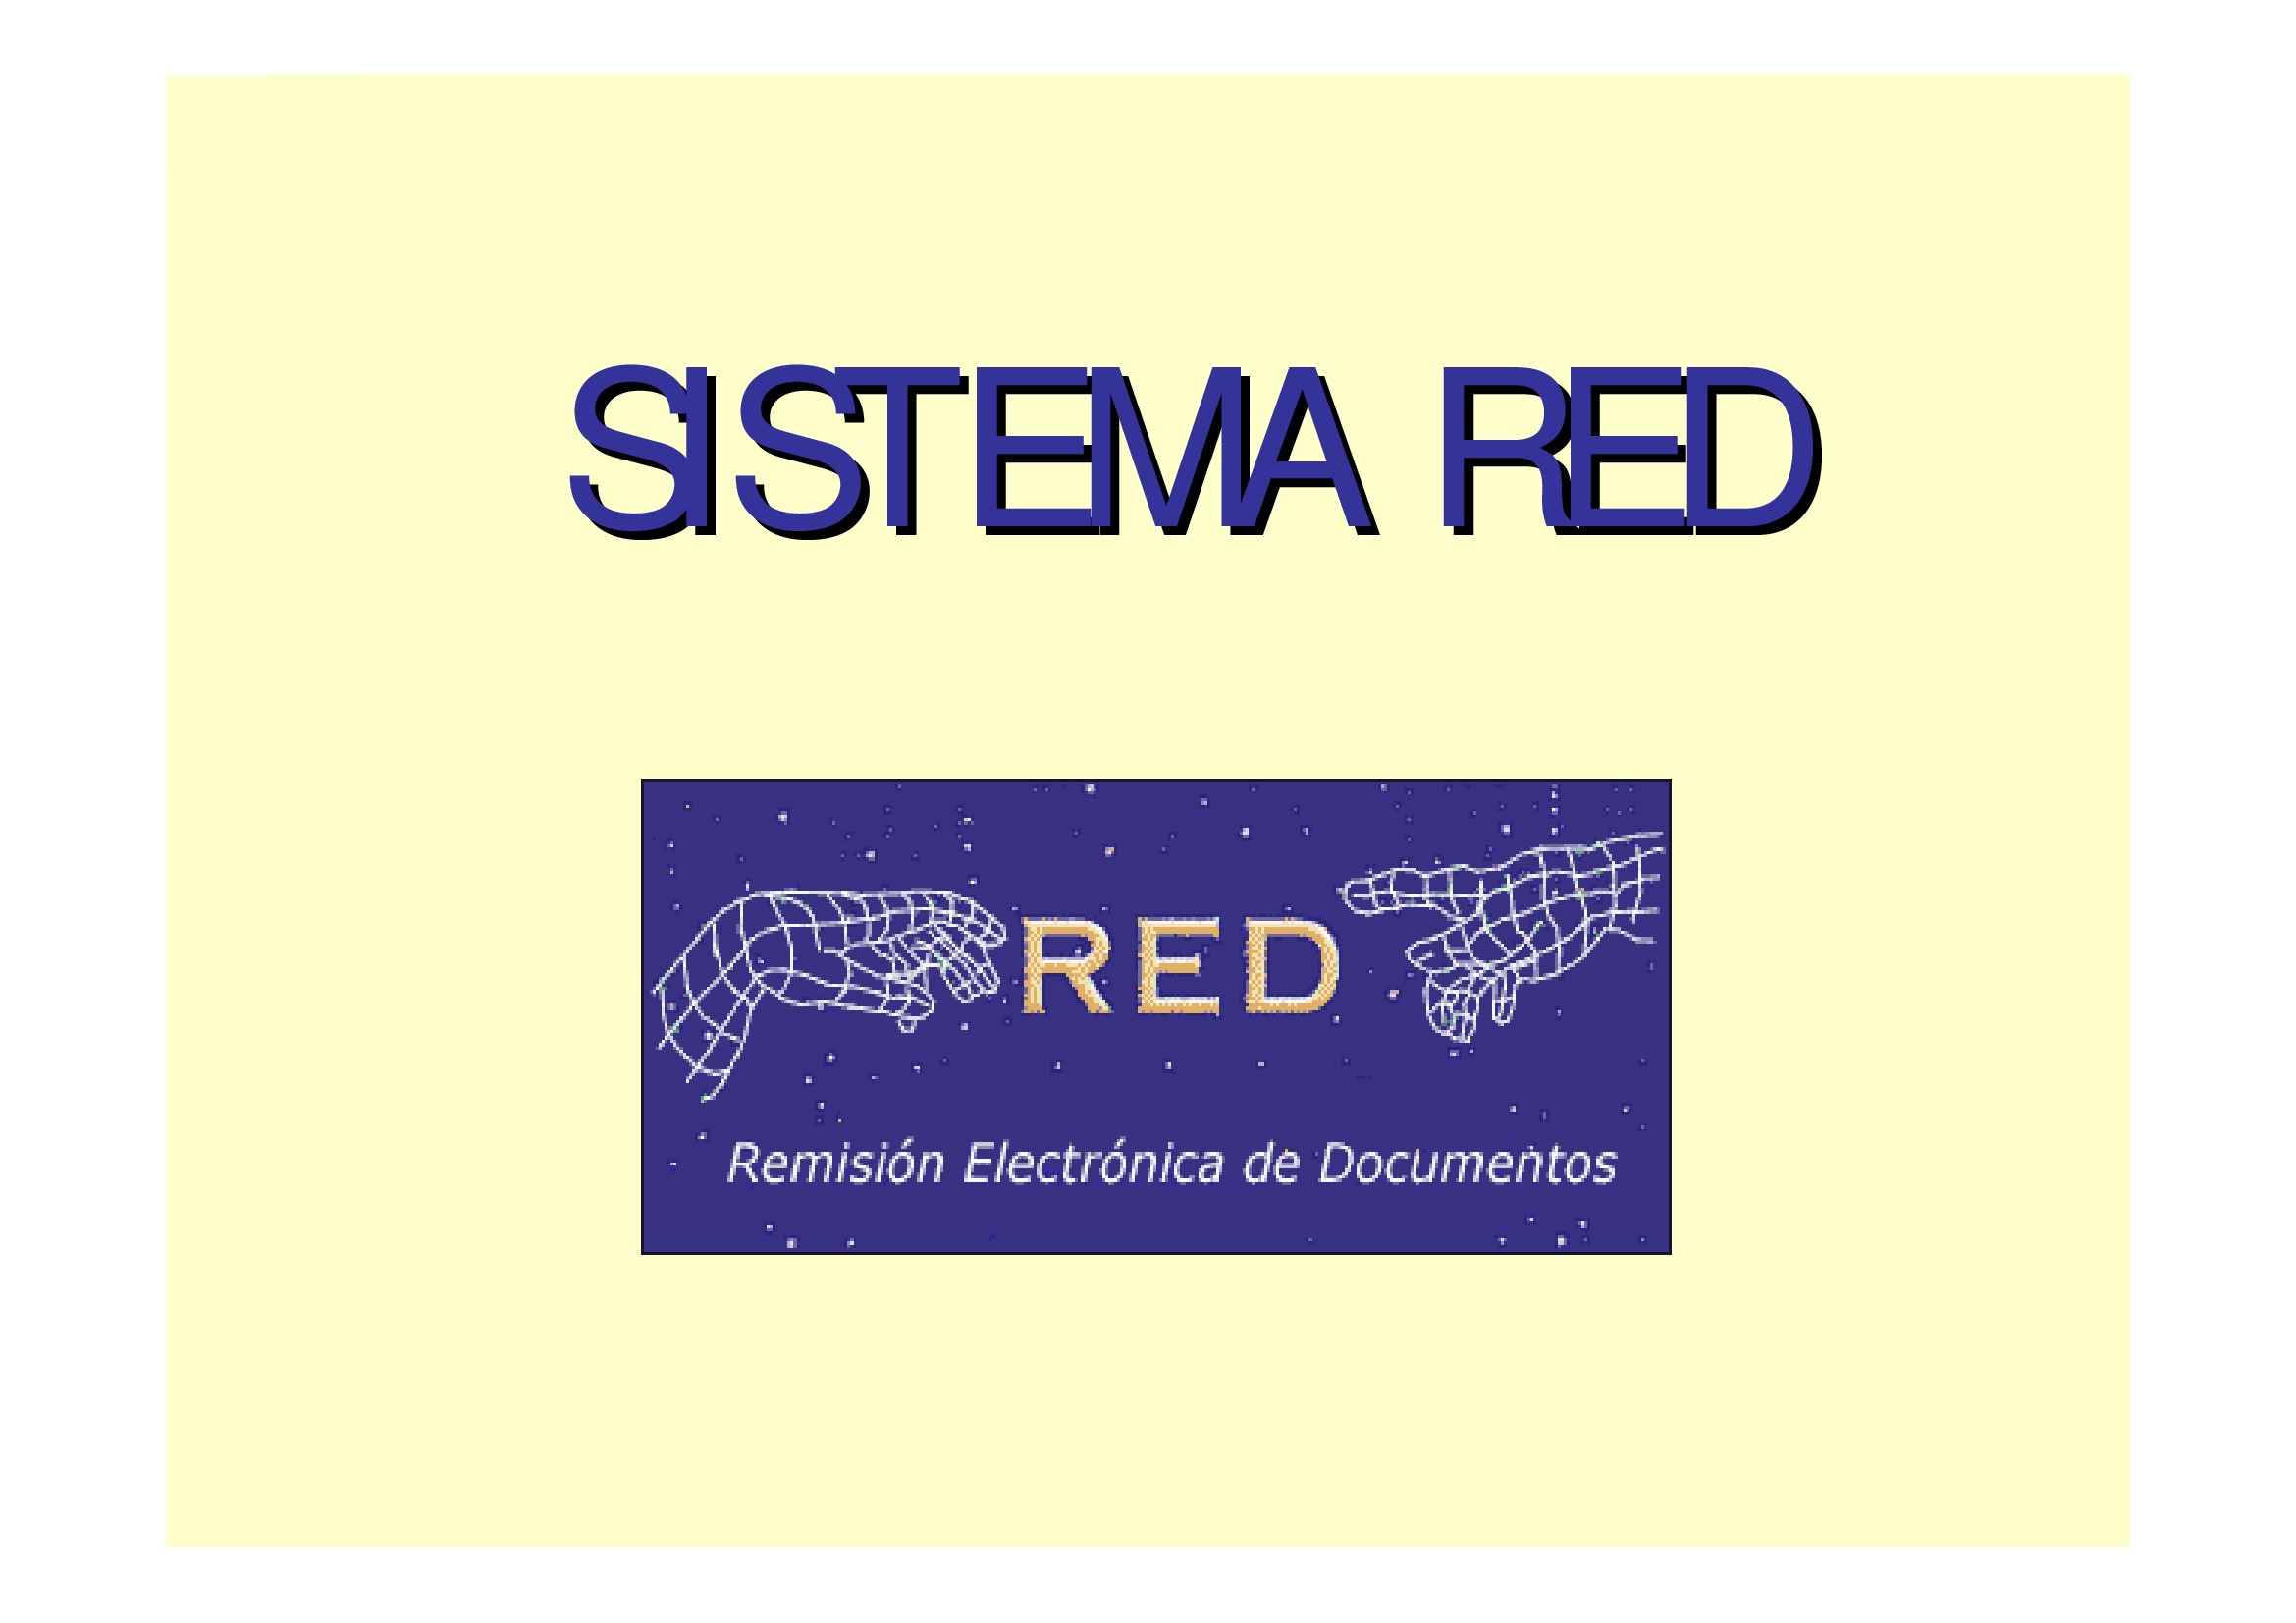 sistema red